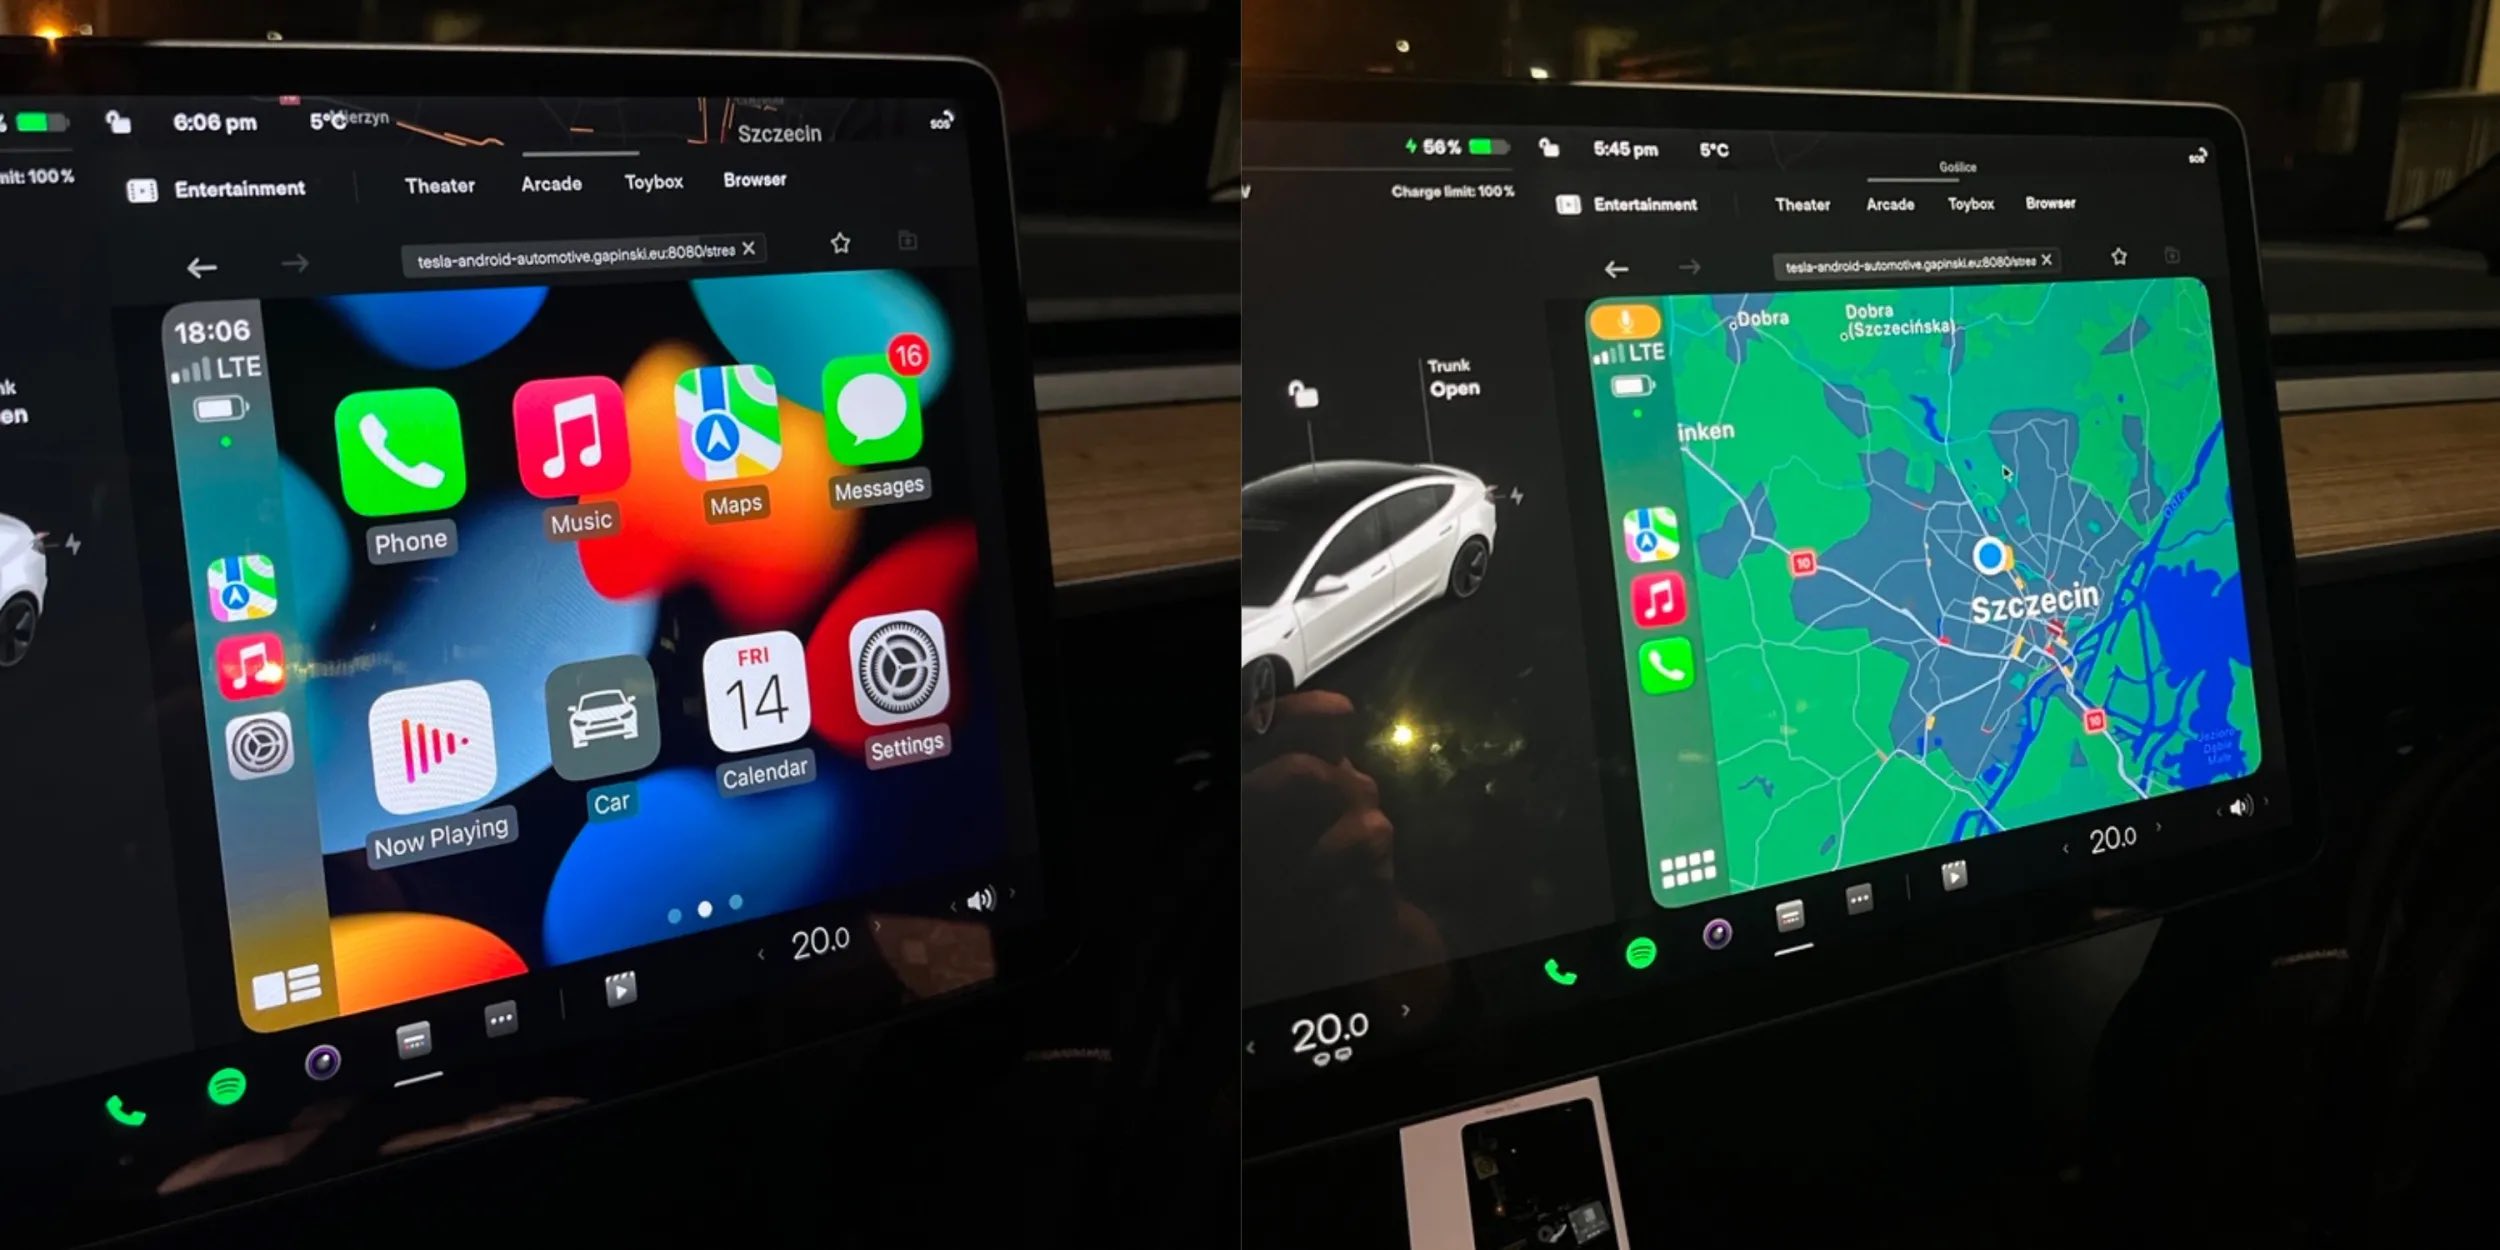 AppleCar & Android Auto kompatibles Fahrerdisplay ohne Kabel für Tesla  Model 3 und Model Y